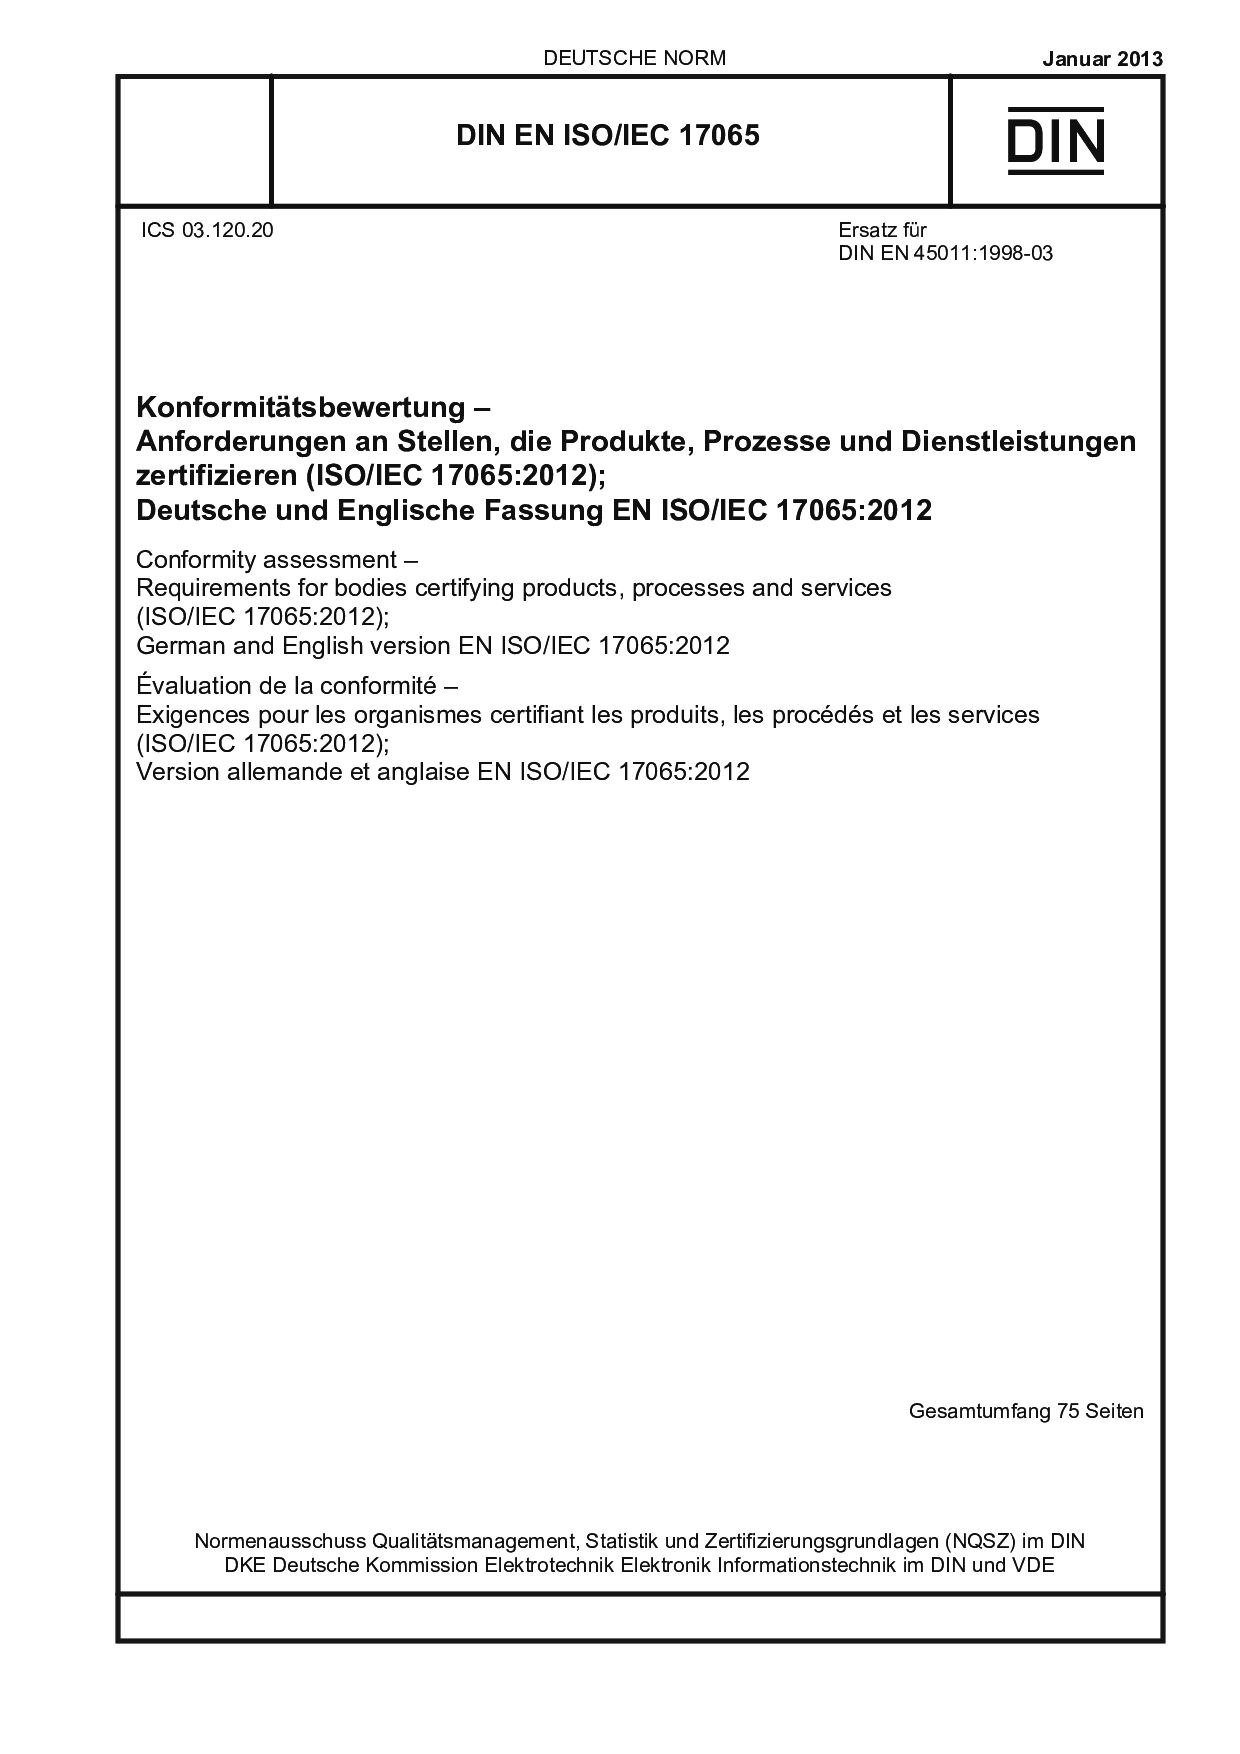 DIN EN ISO/IEC 17065:2013封面图